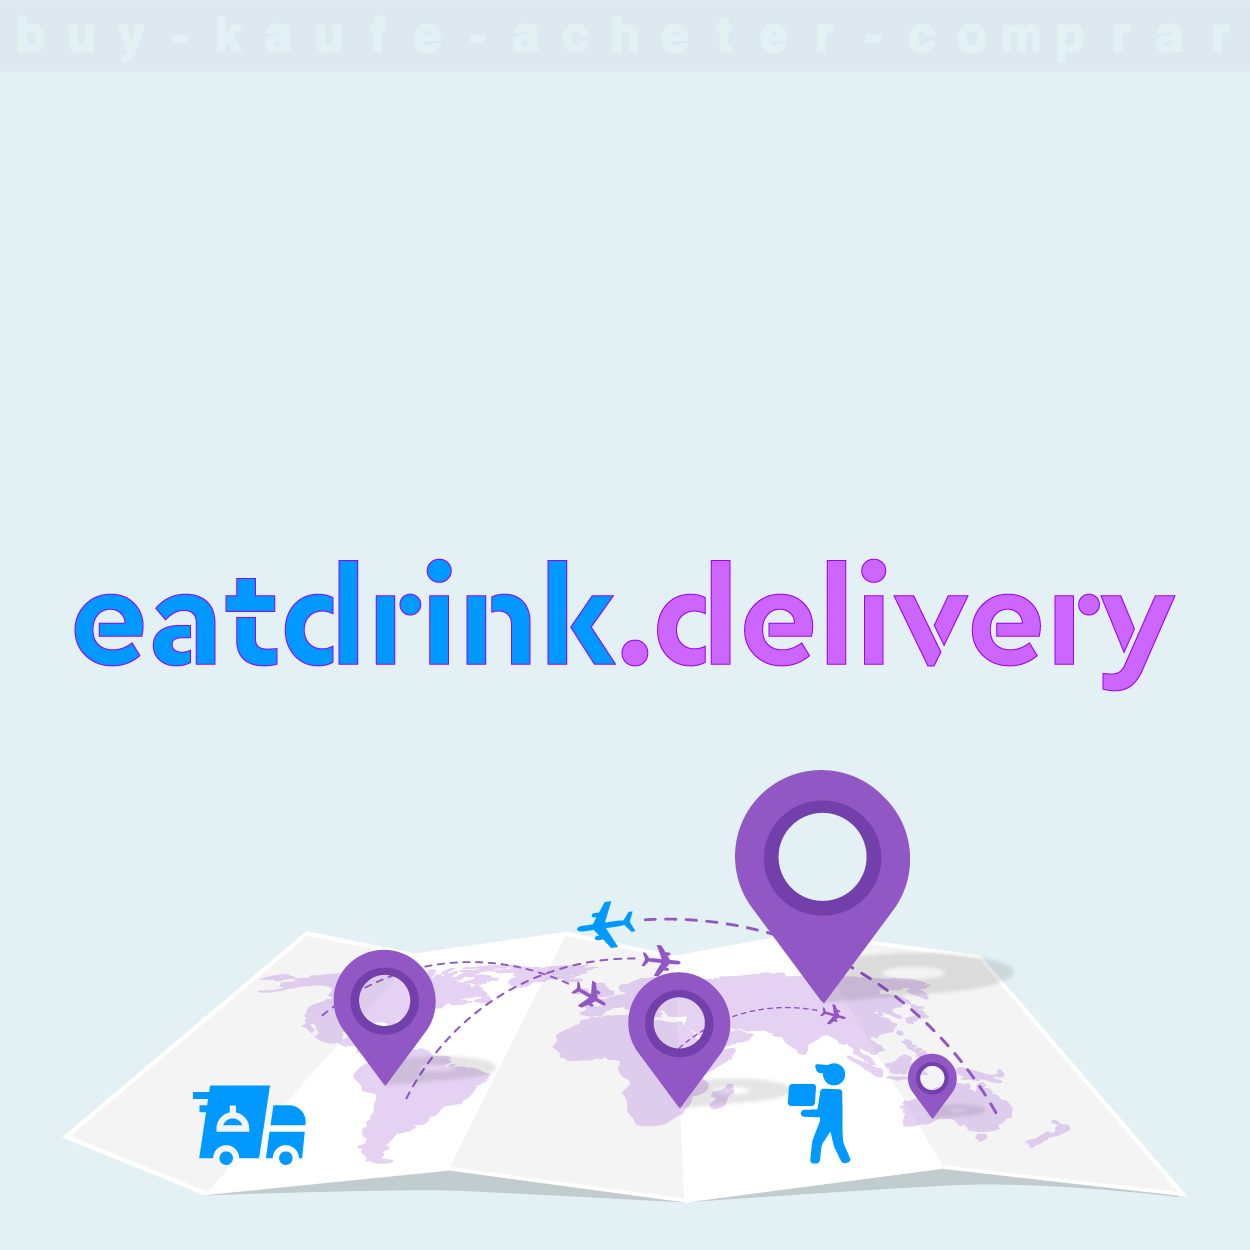 deliveryeatdrink.png